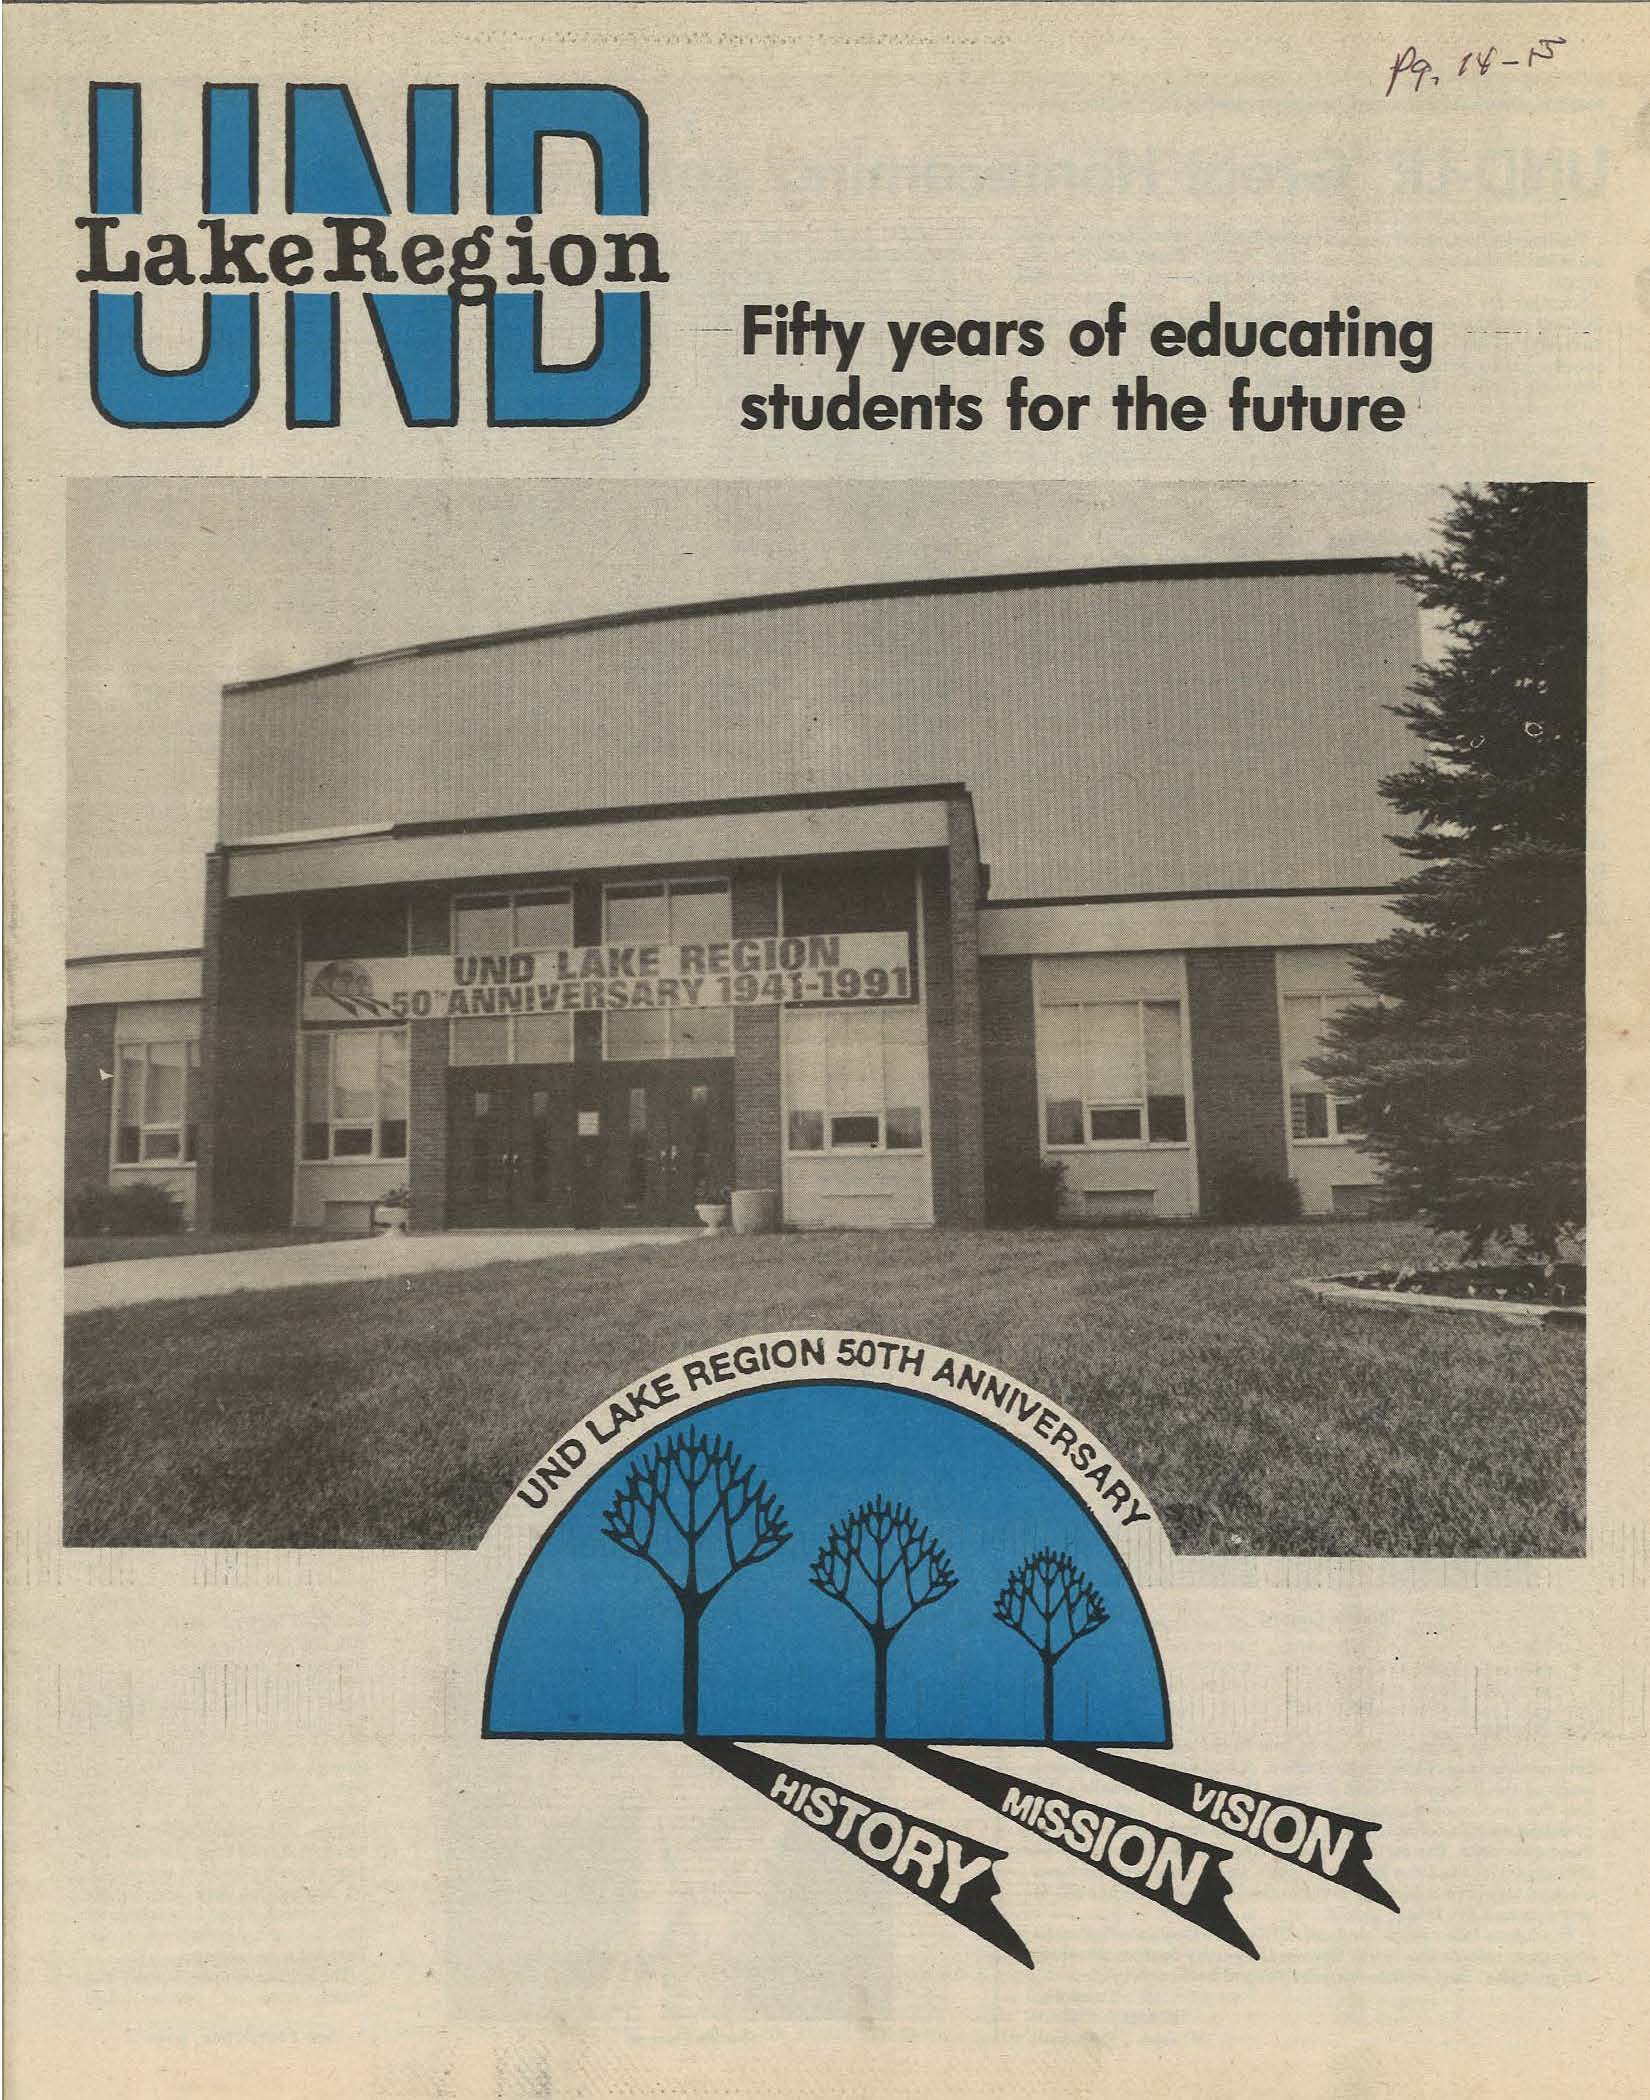 UND-Lake Region 50th Anniversary Publication, 1991